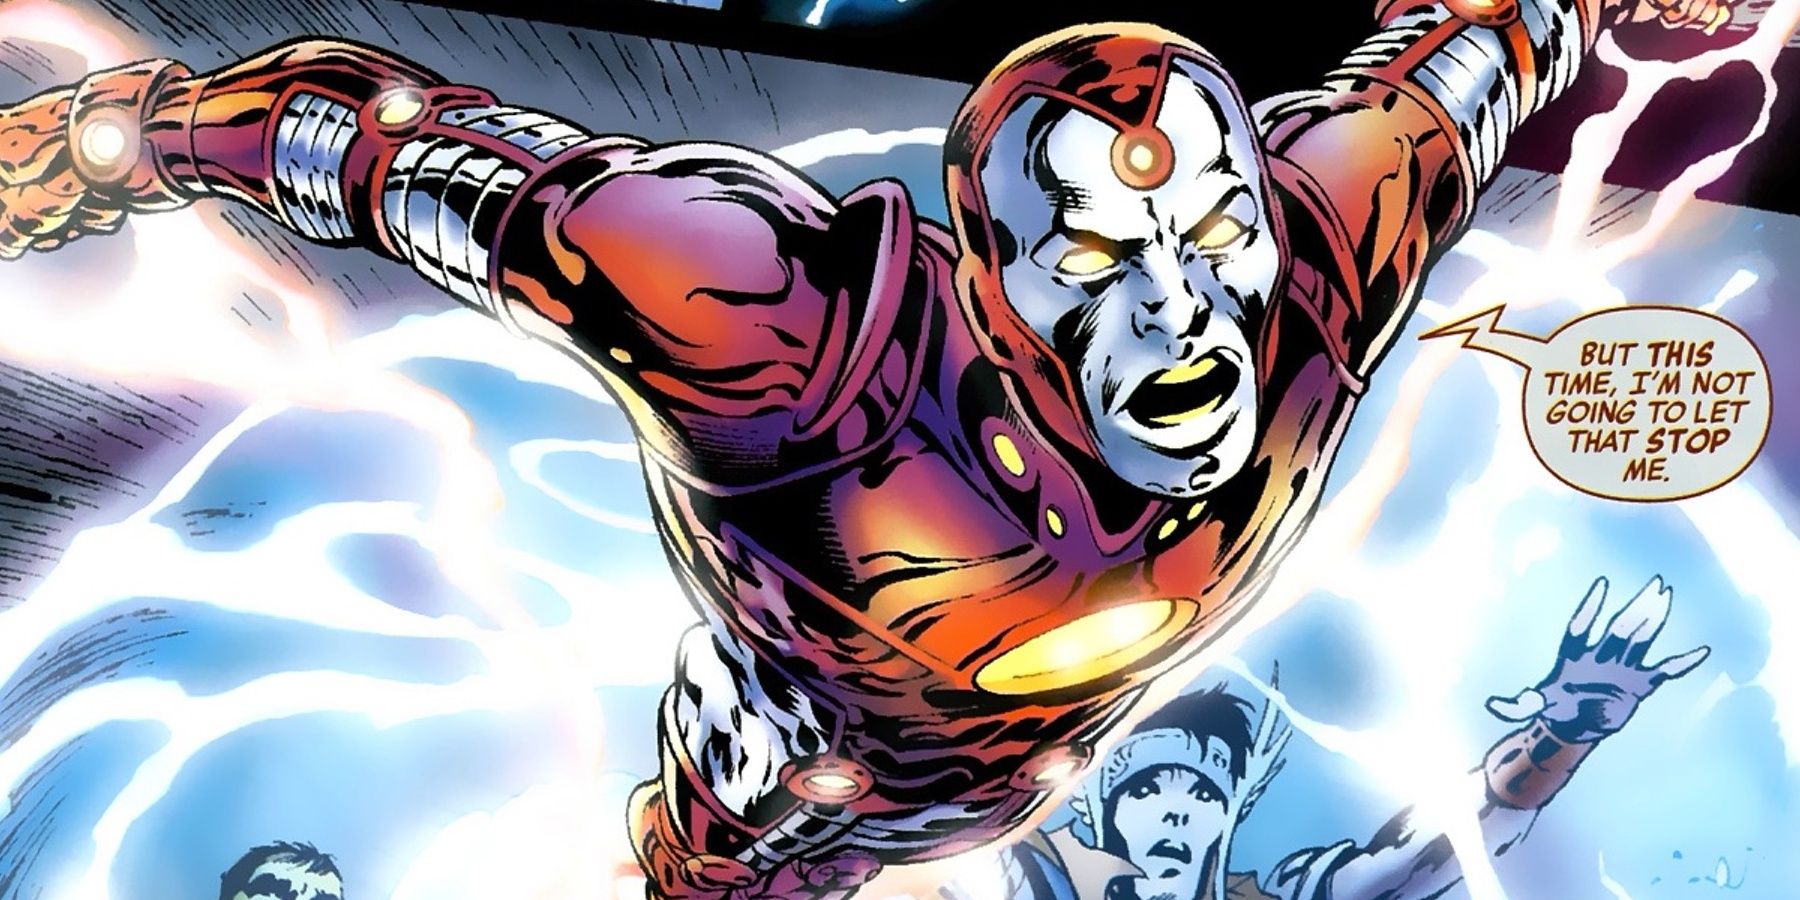 Iron Lad flies into battle in Marvel Comics.